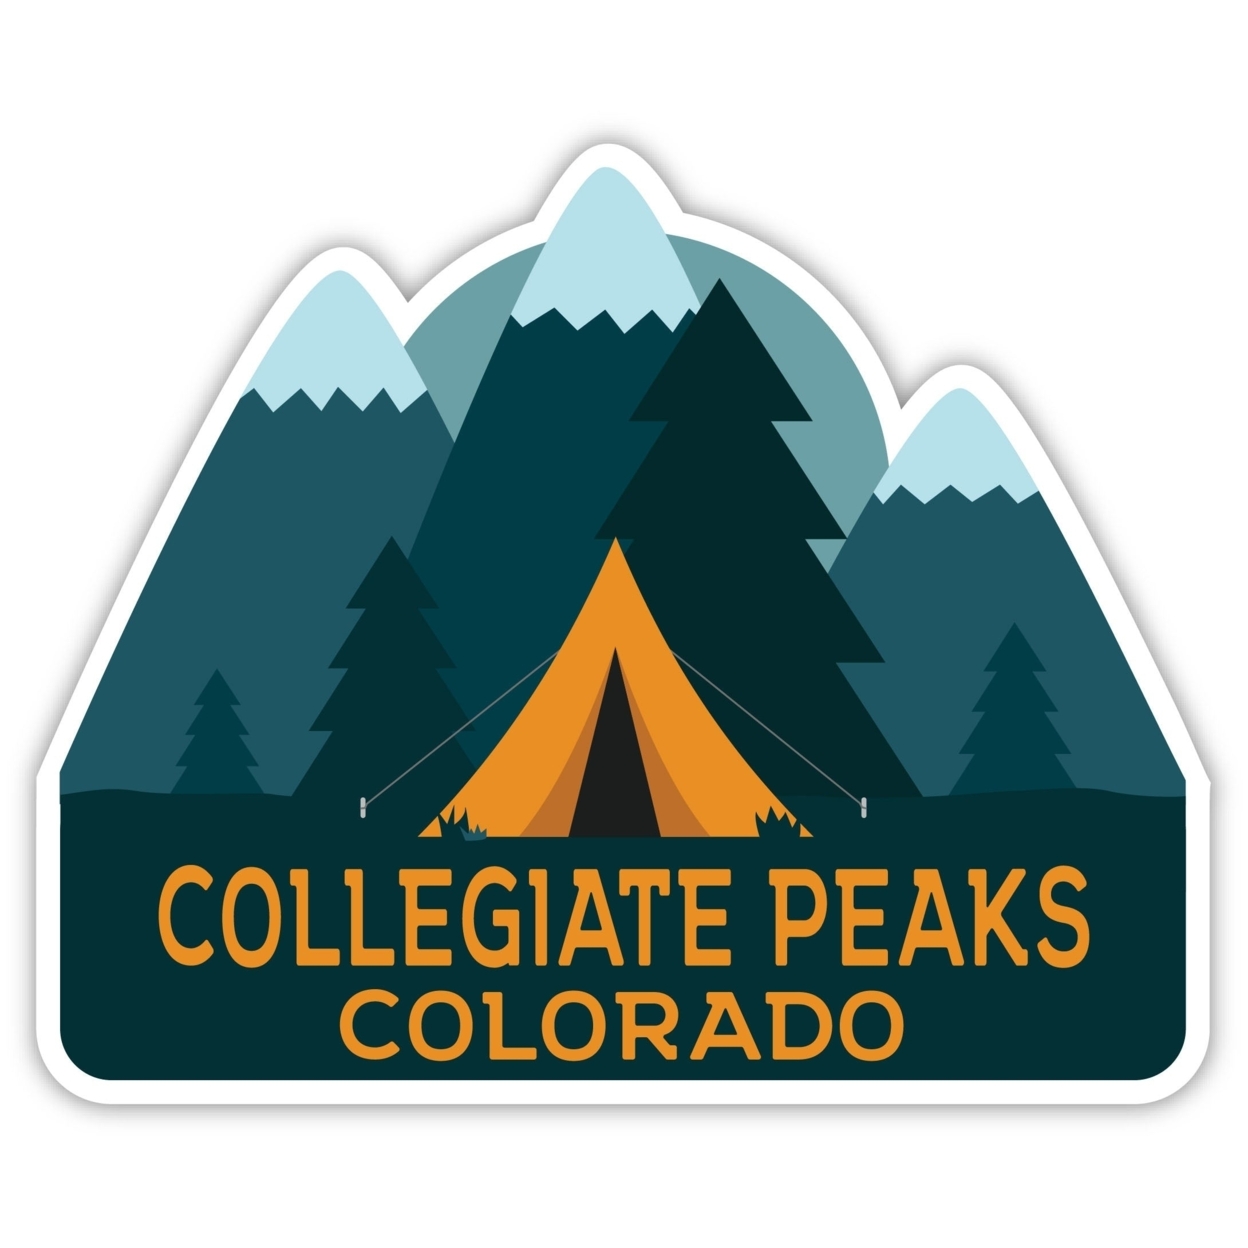 Collegiate Peaks Colorado Souvenir Decorative Stickers (Choose Theme And Size) - Single Unit, 6-Inch, Tent